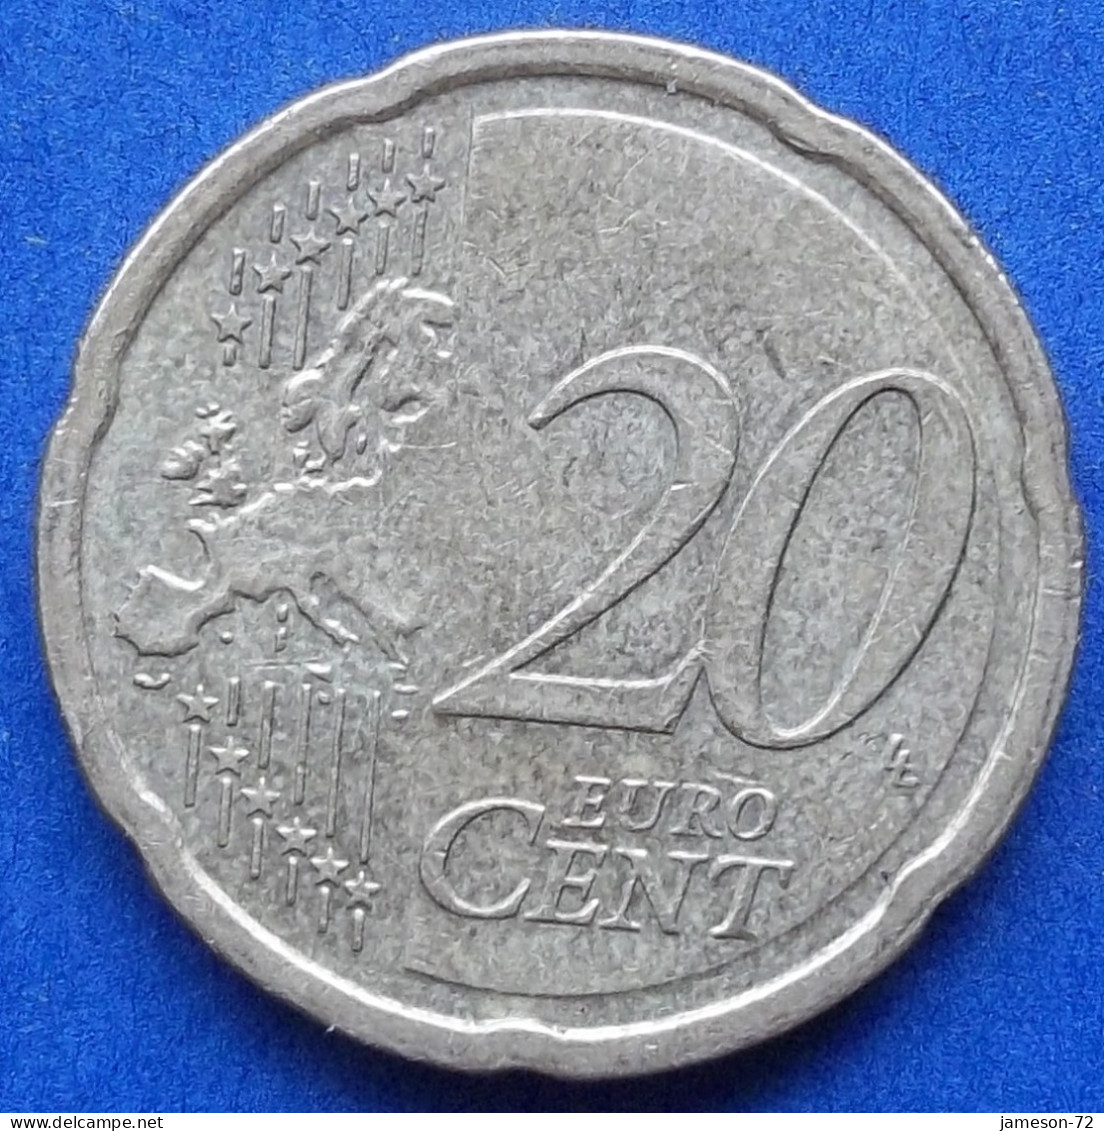 LITHUANIA - 20 Euro Cents 2015 KM# 209 Euro Coinage (2015) - Edelweiss Coins - Lituania